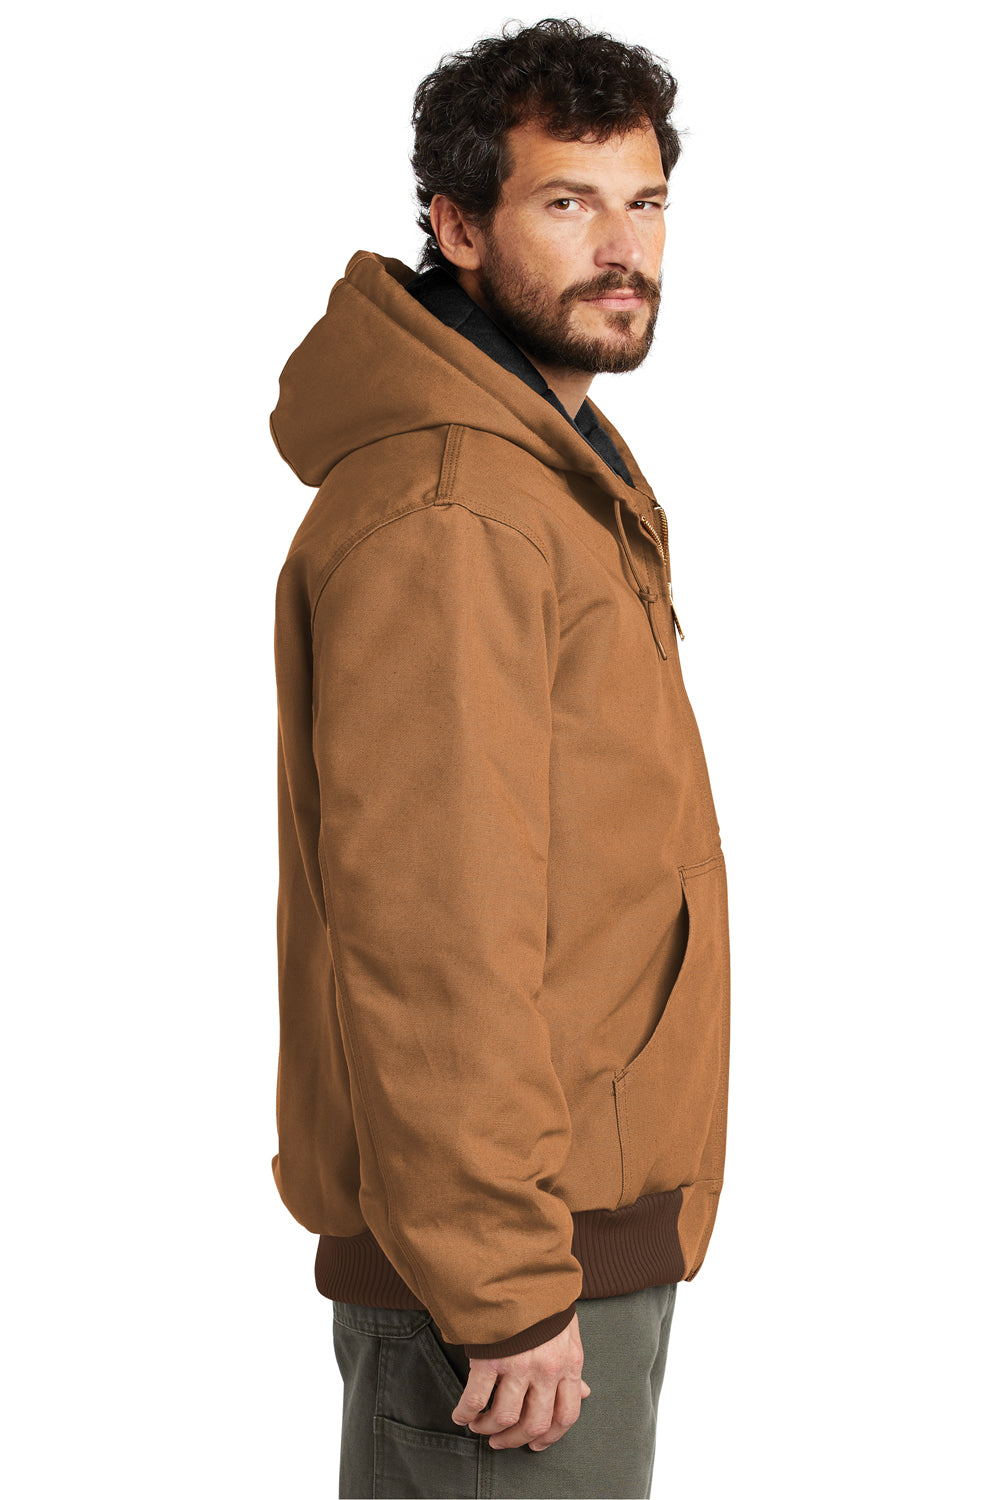 Carhartt CTSJ140/CTTSJ140 Mens Wind & Water Resistant Duck Cloth Full Zip Hooded Work Jacket Carhartt Brown Model Side